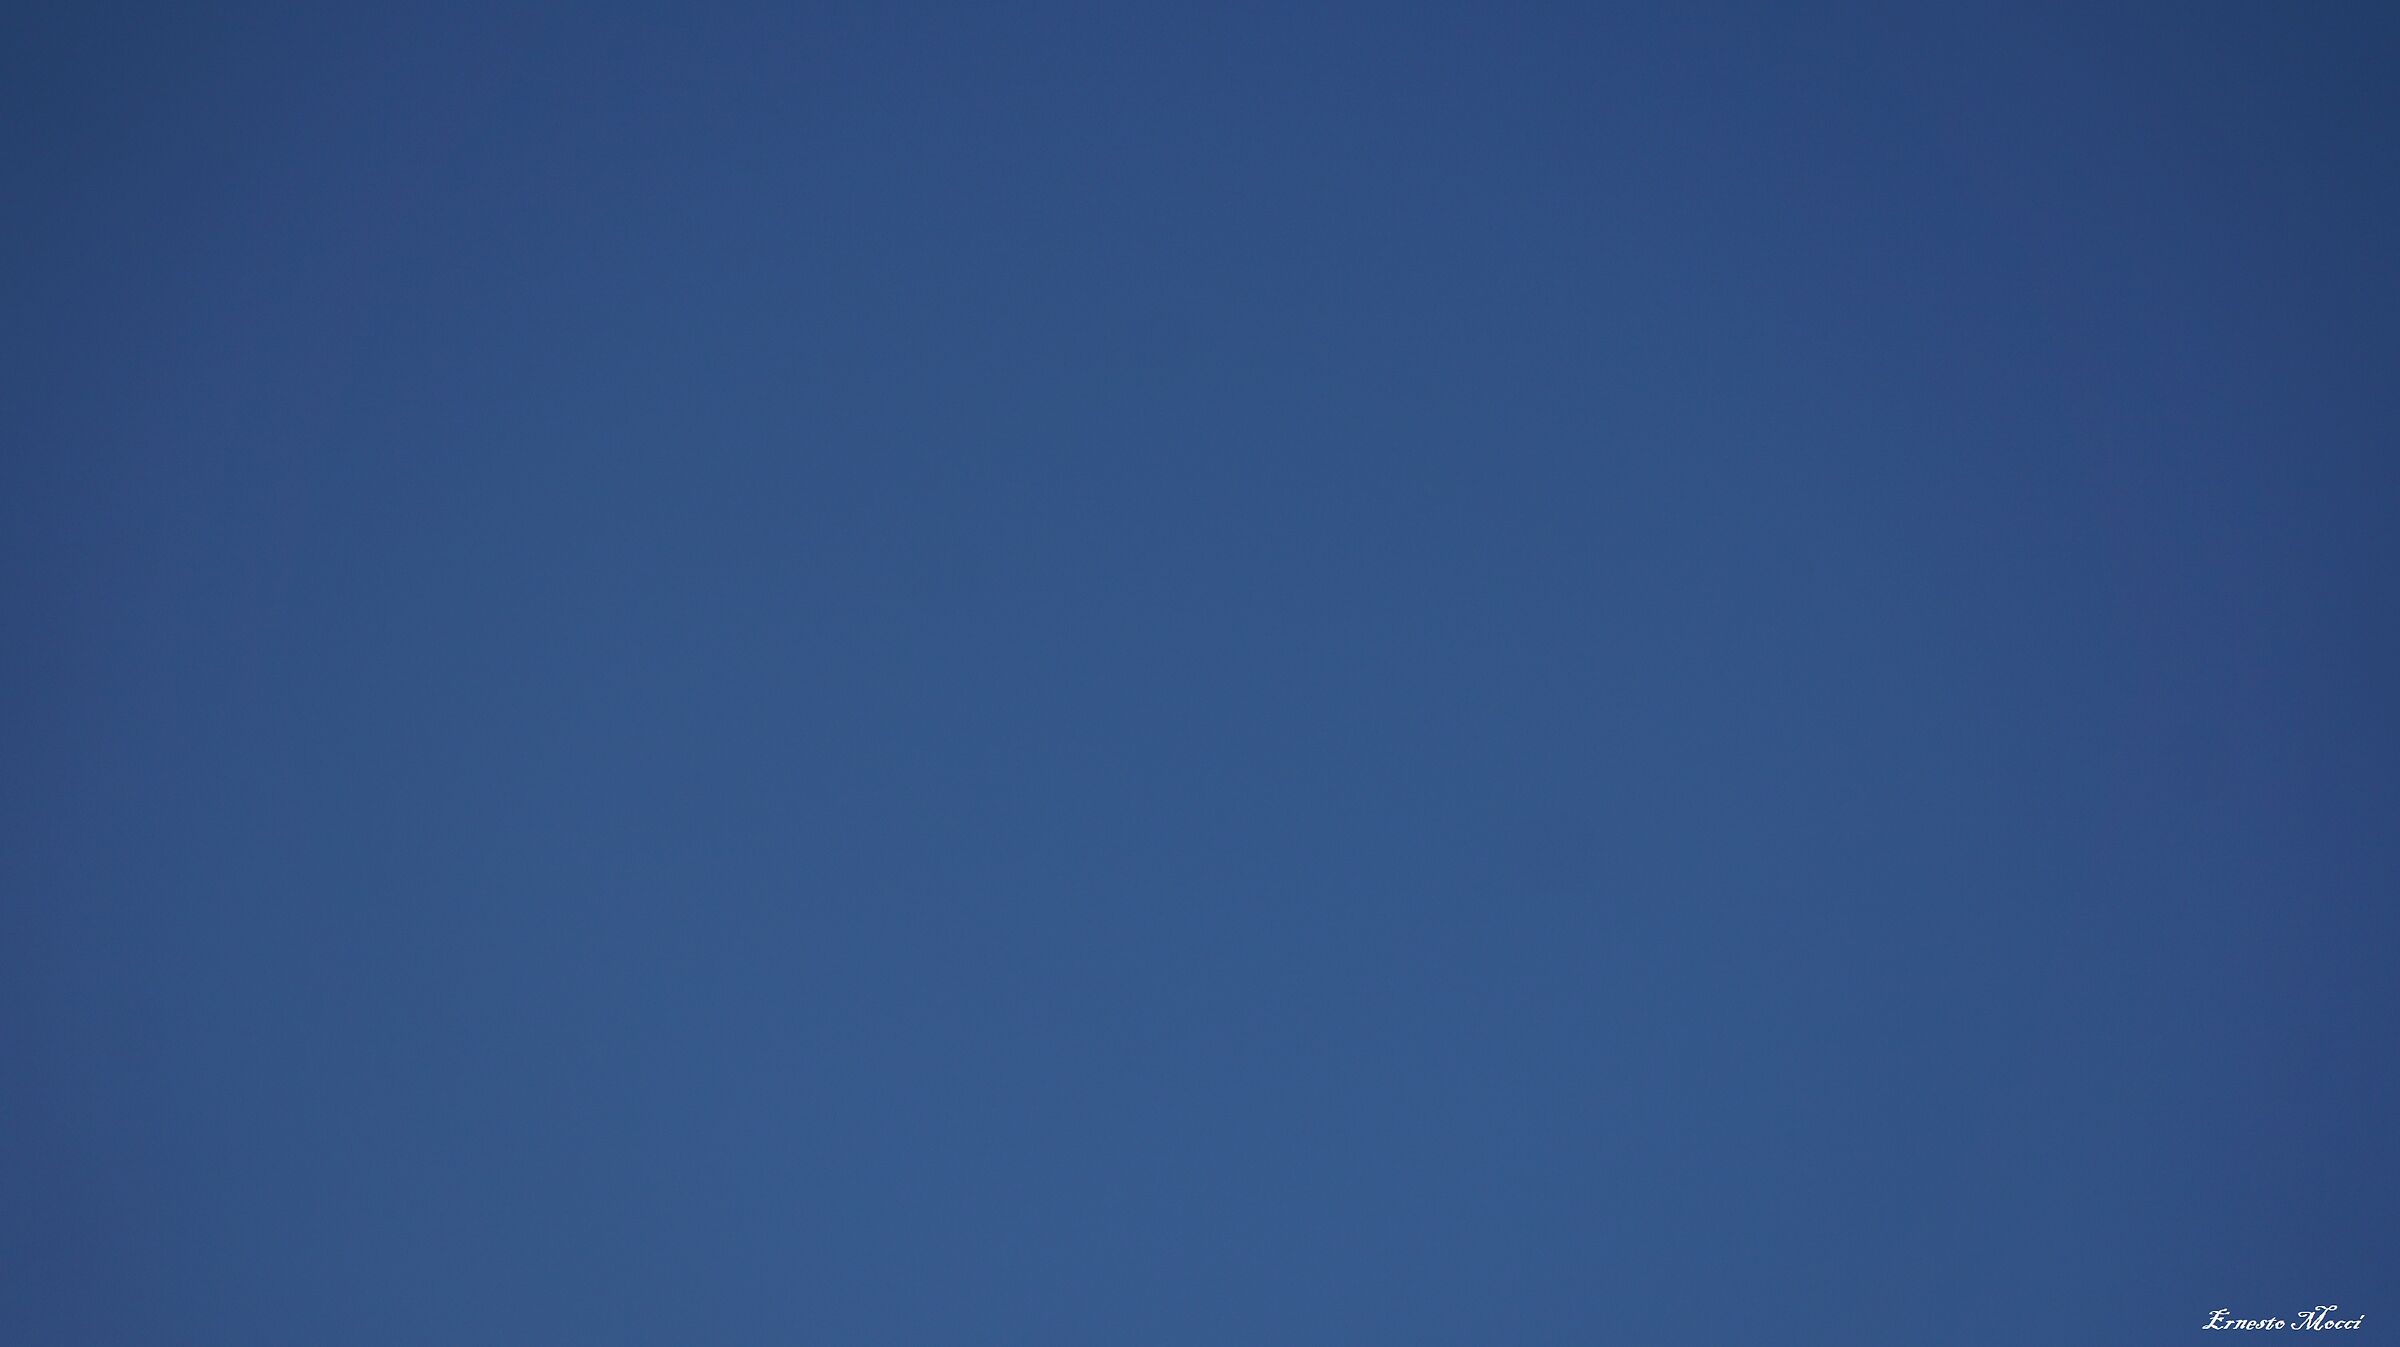 Blue Sky - Tela Pittorica del Cielo...